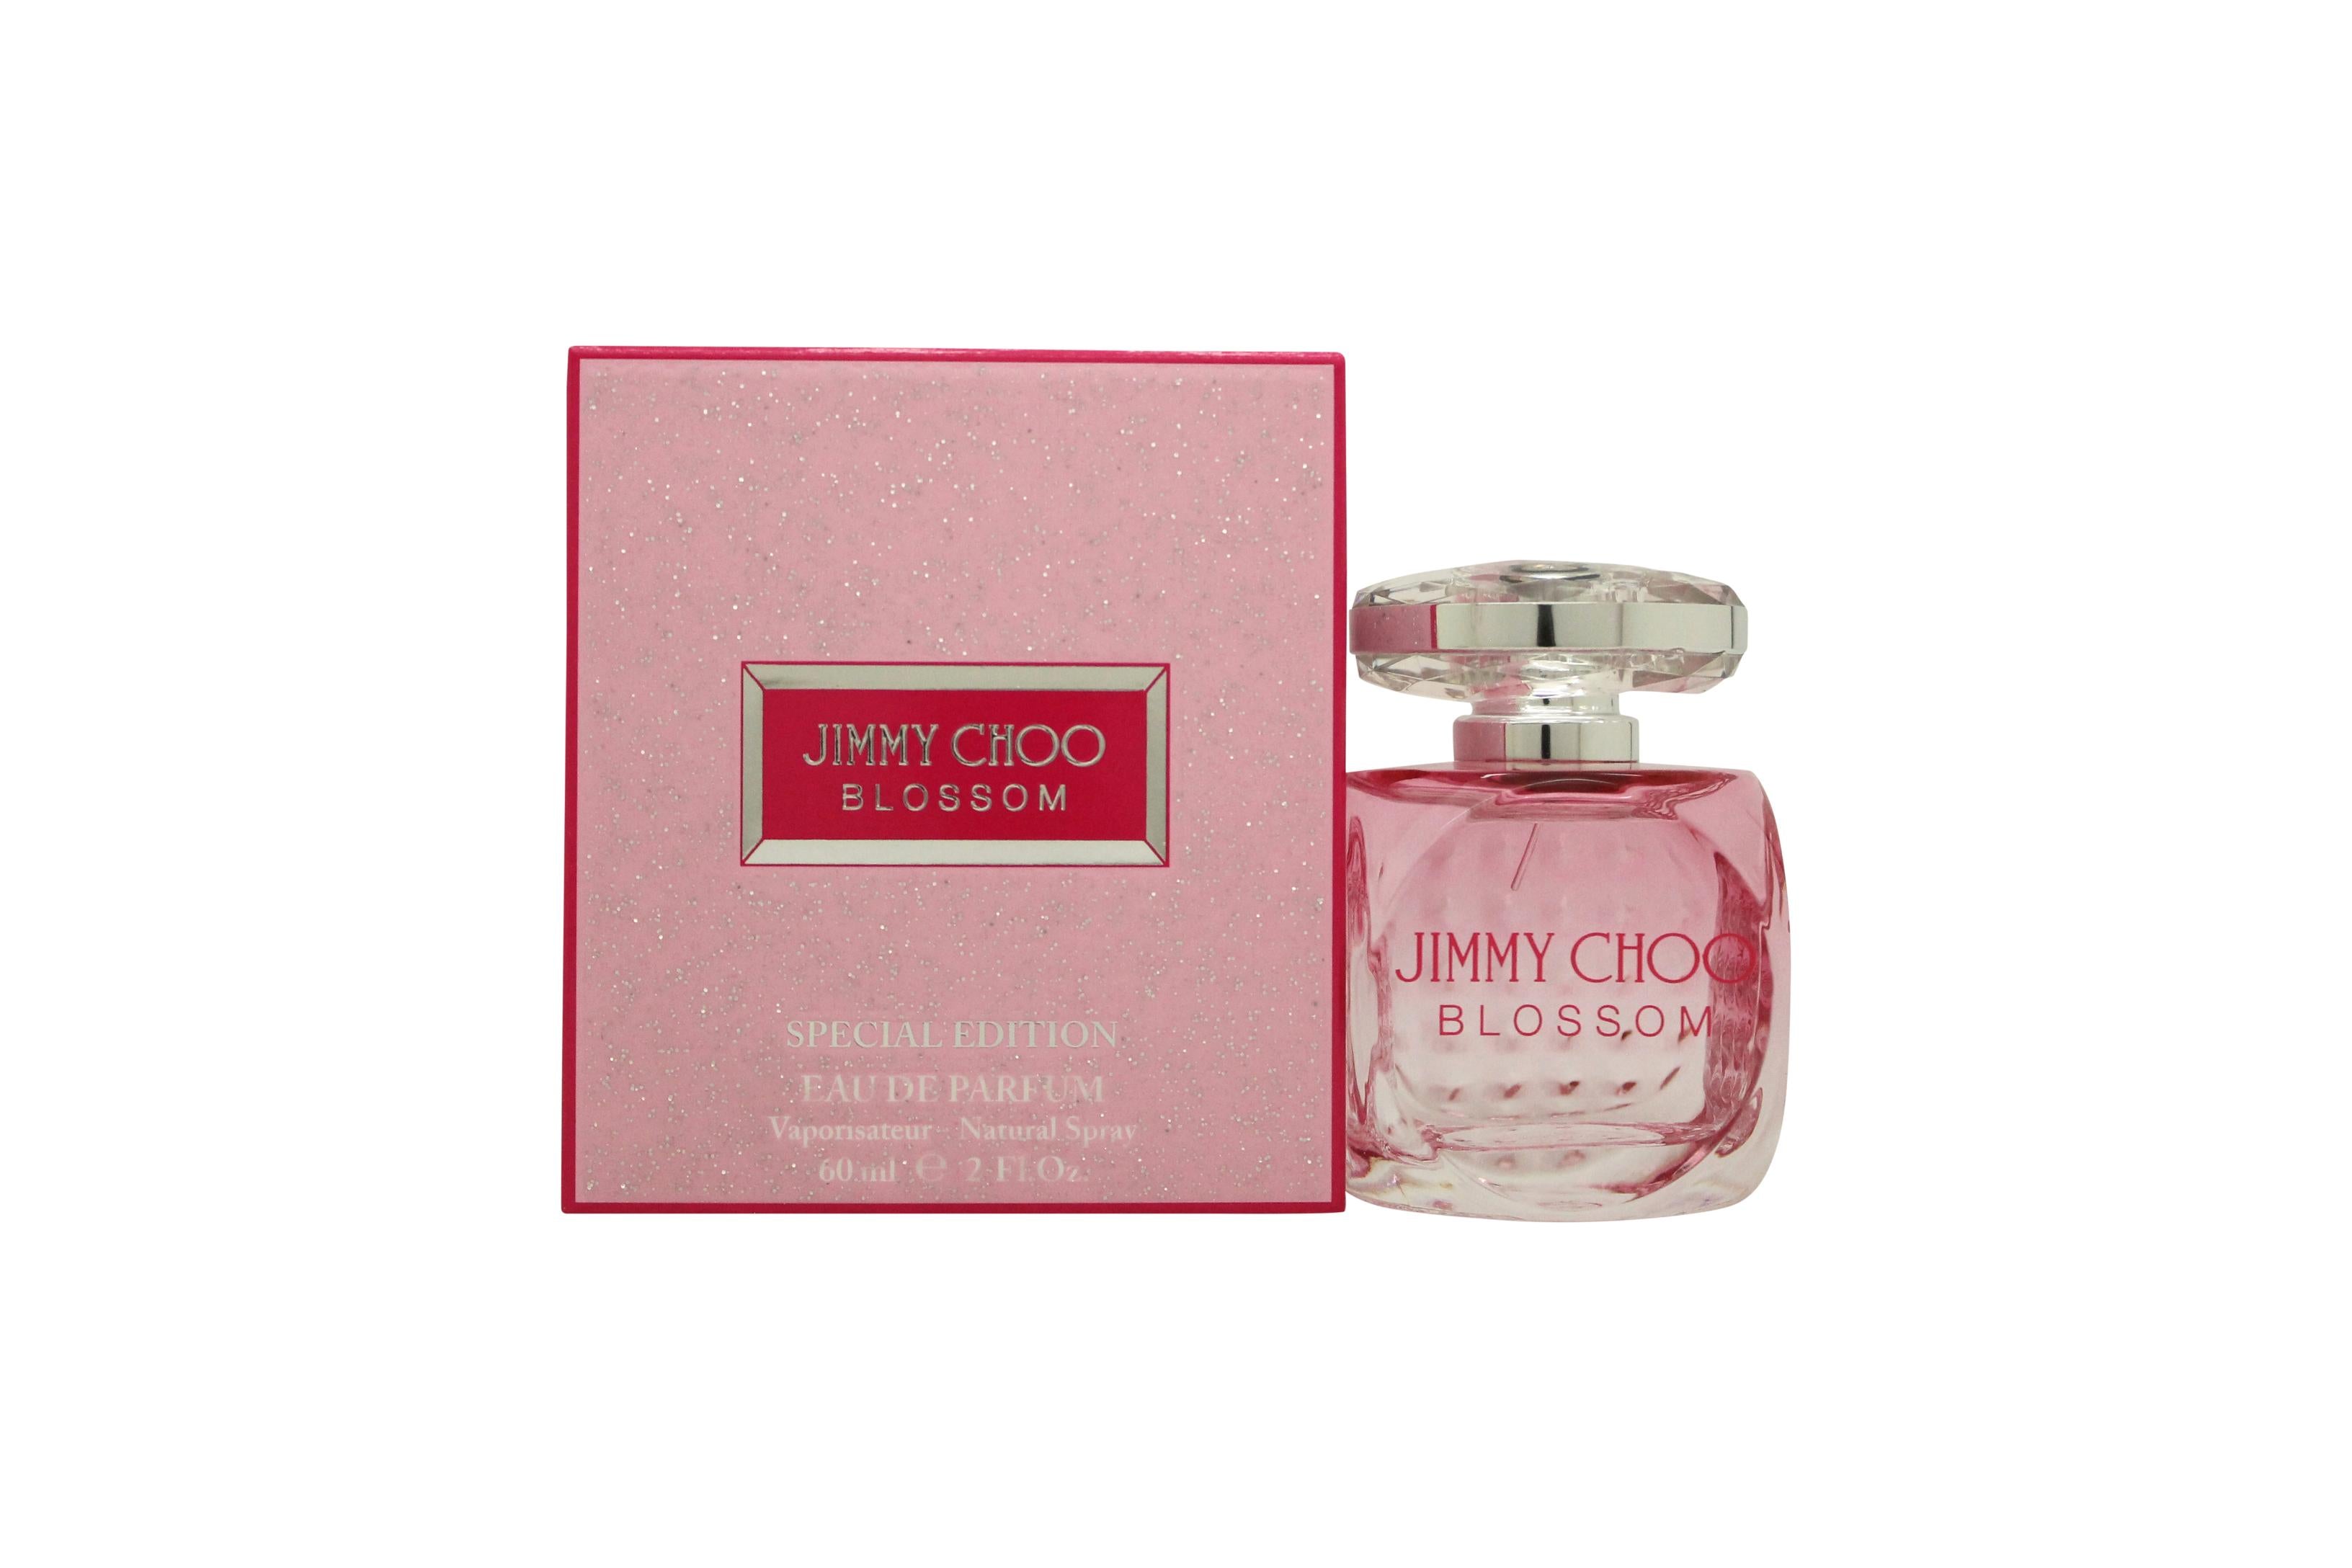 View Jimmy Choo Jimmy Choo Blossom Special Edition Eau de Parfum 60ml Spray information